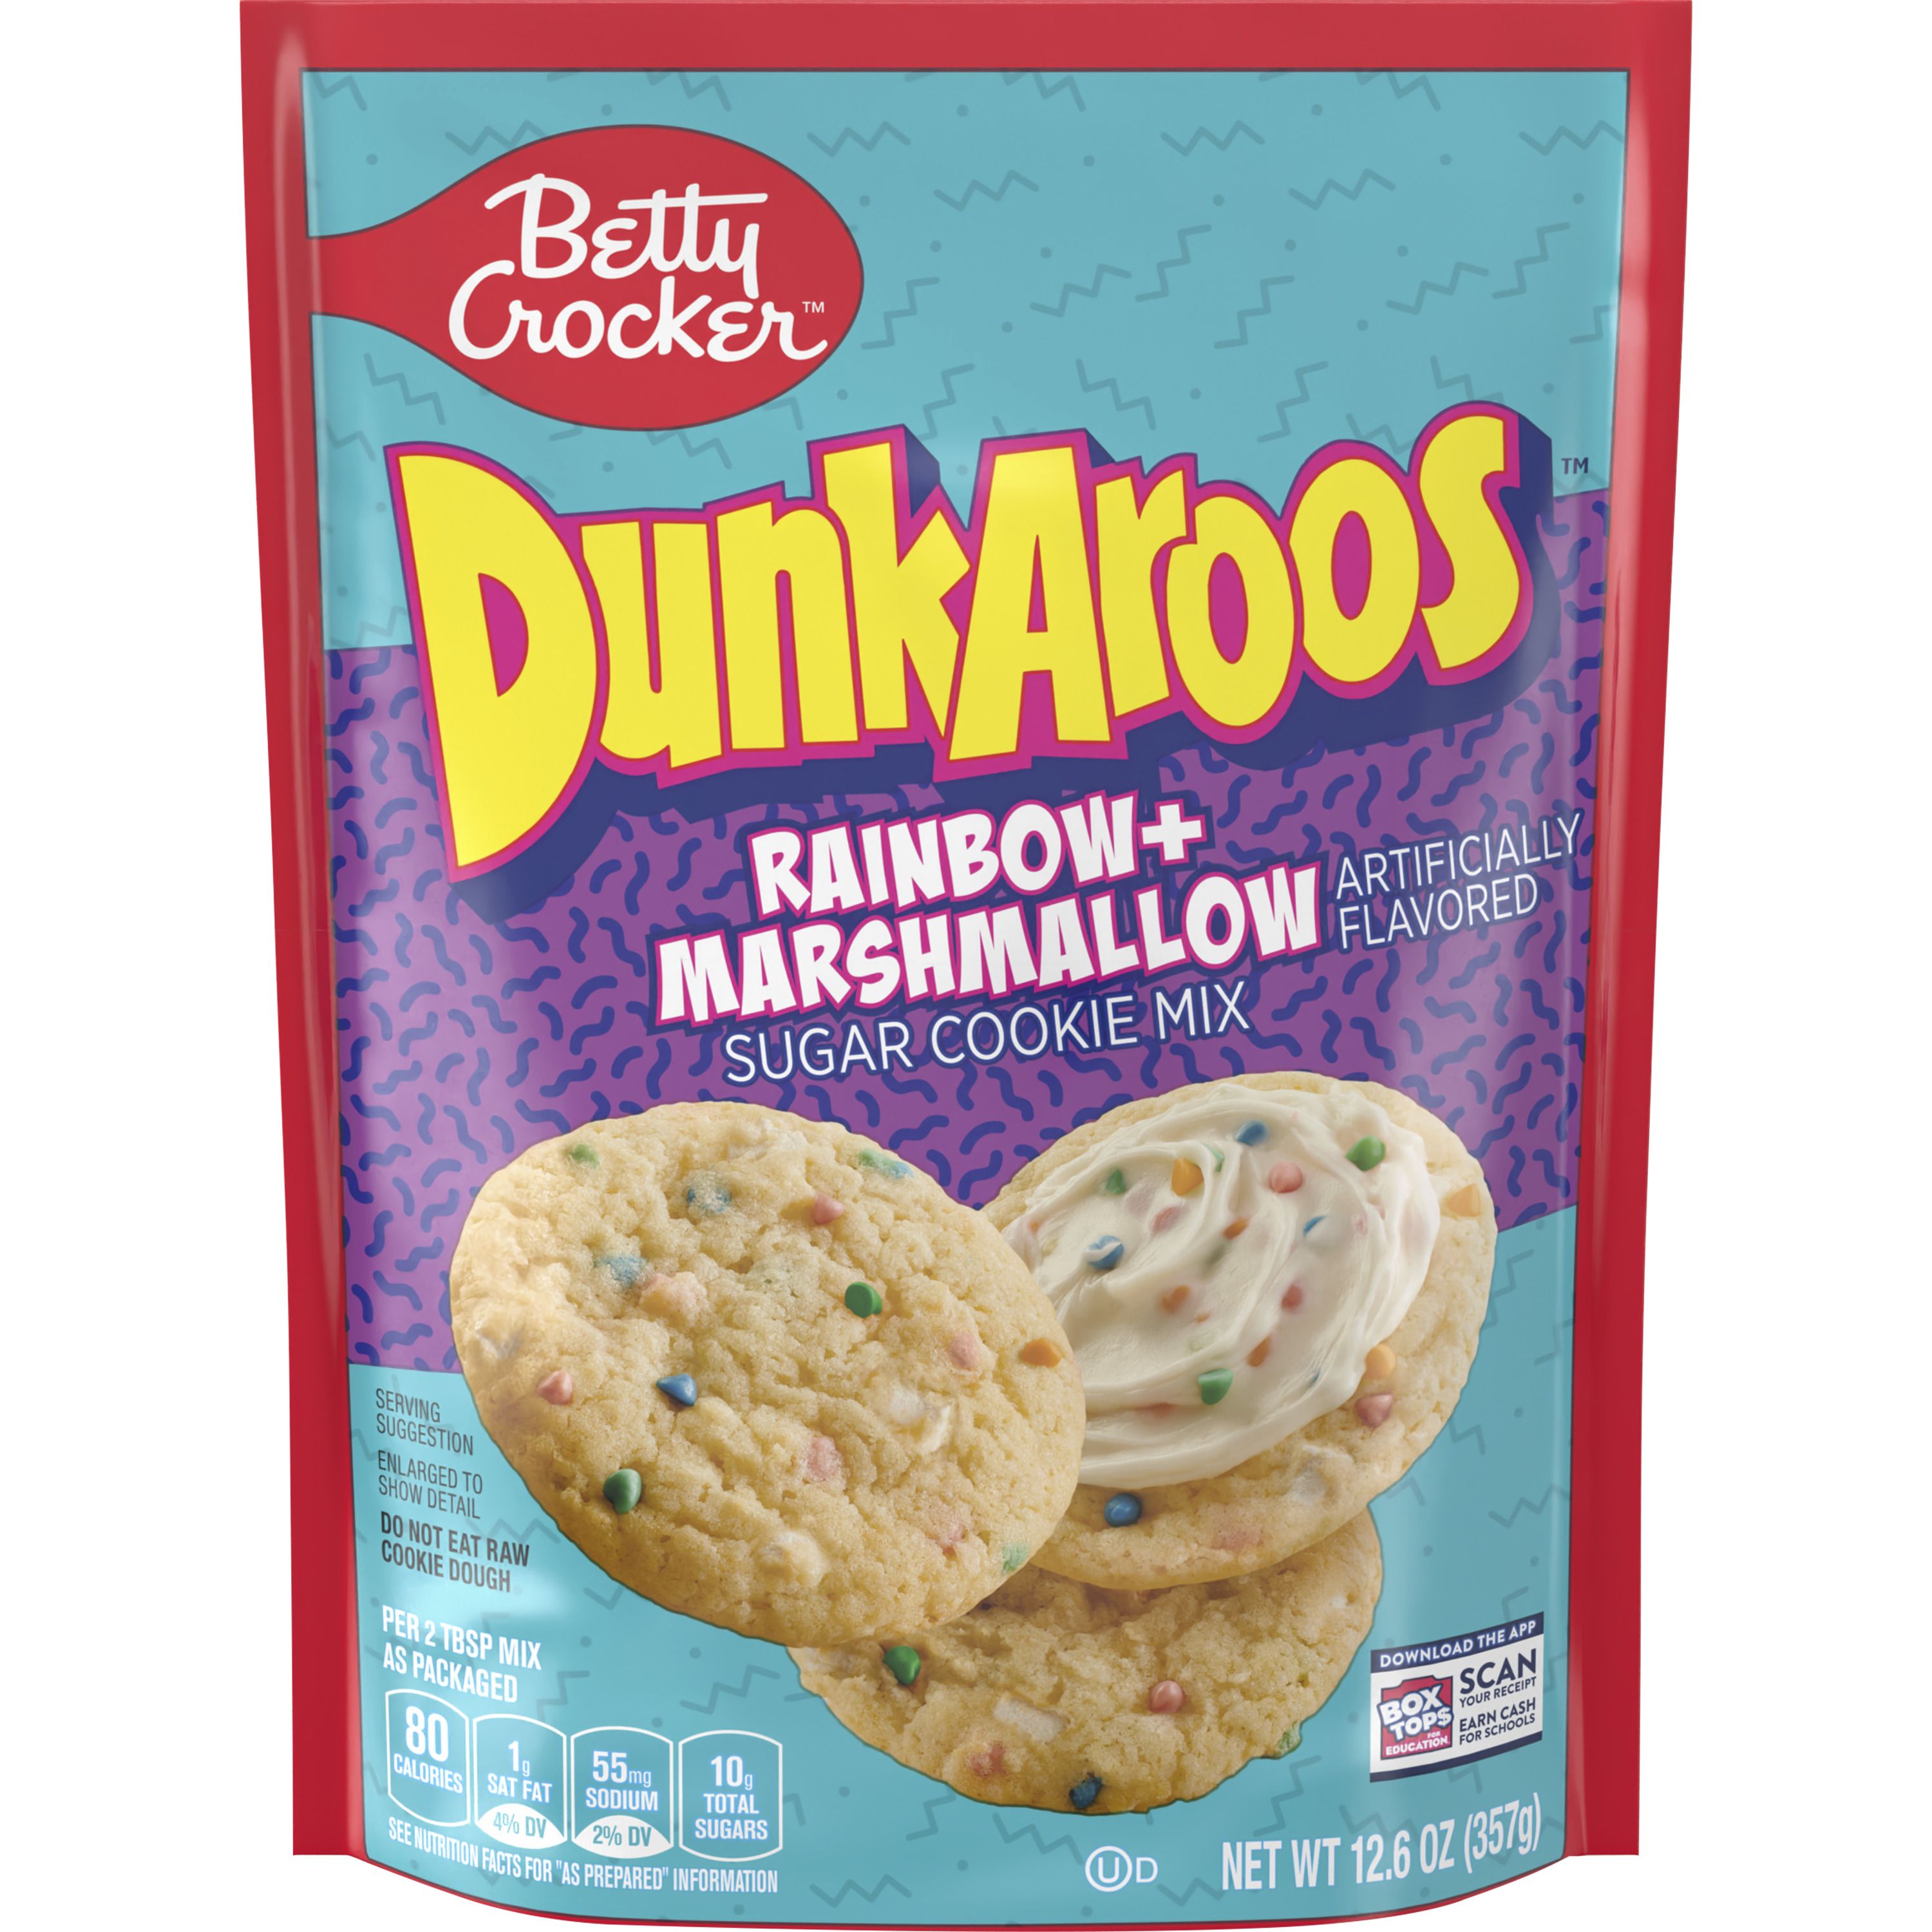 Betty Crocker Dunkaroos Sugar Cookie Mix, Rainbow + Marshmallow, 12.6 oz - Front